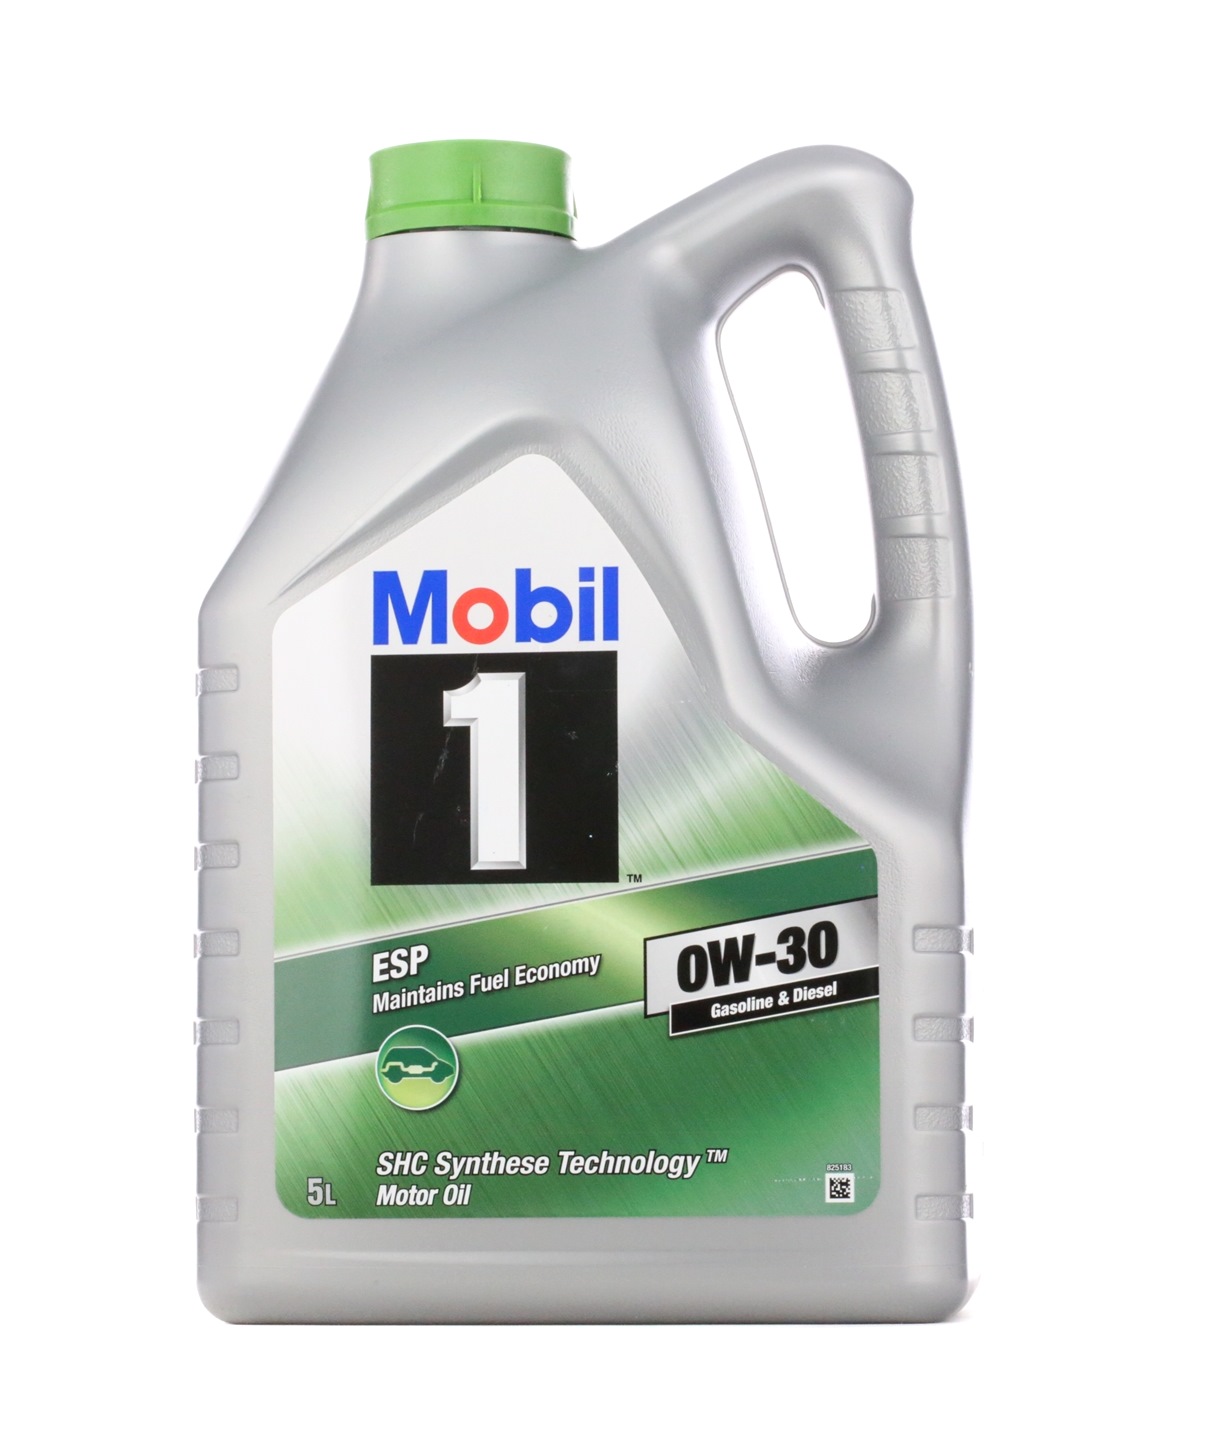 Automobile oil VW 507 00 MOBIL petrol - 153367 1, ESP